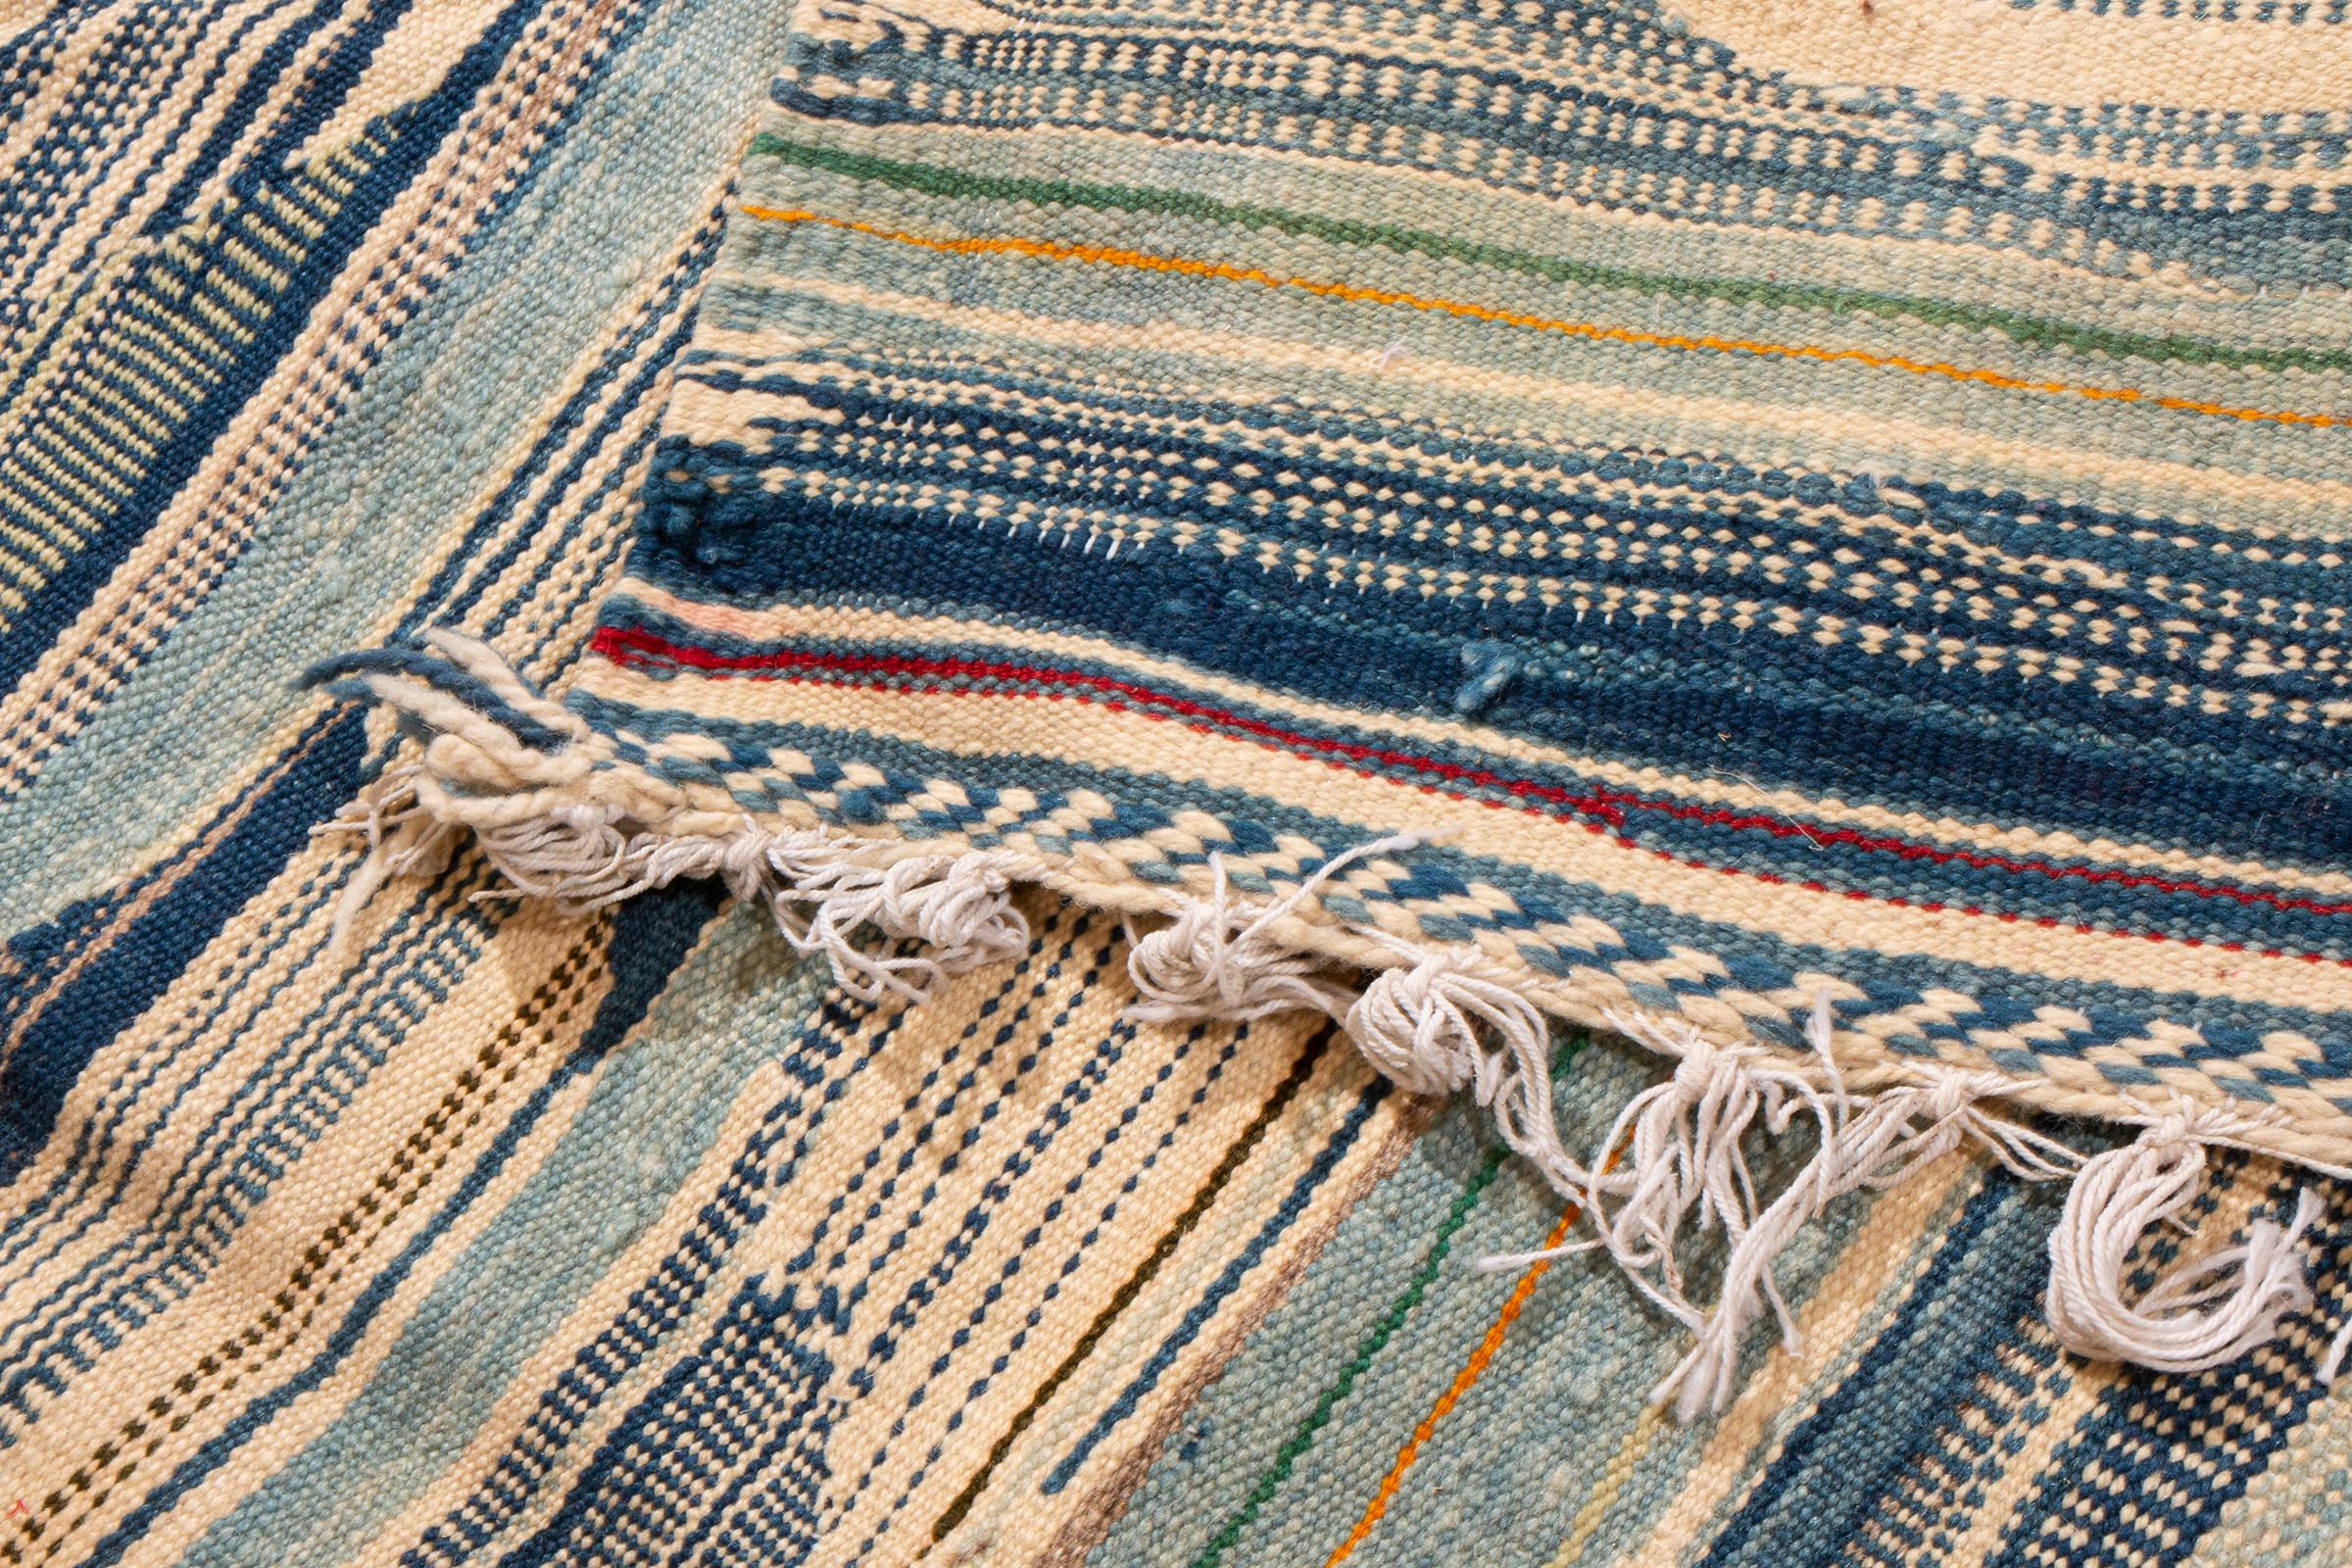 Mid-20th Century 1950s Midcentury Vintage Moroccan Kilim Beige Blue Striped Flat-Weave